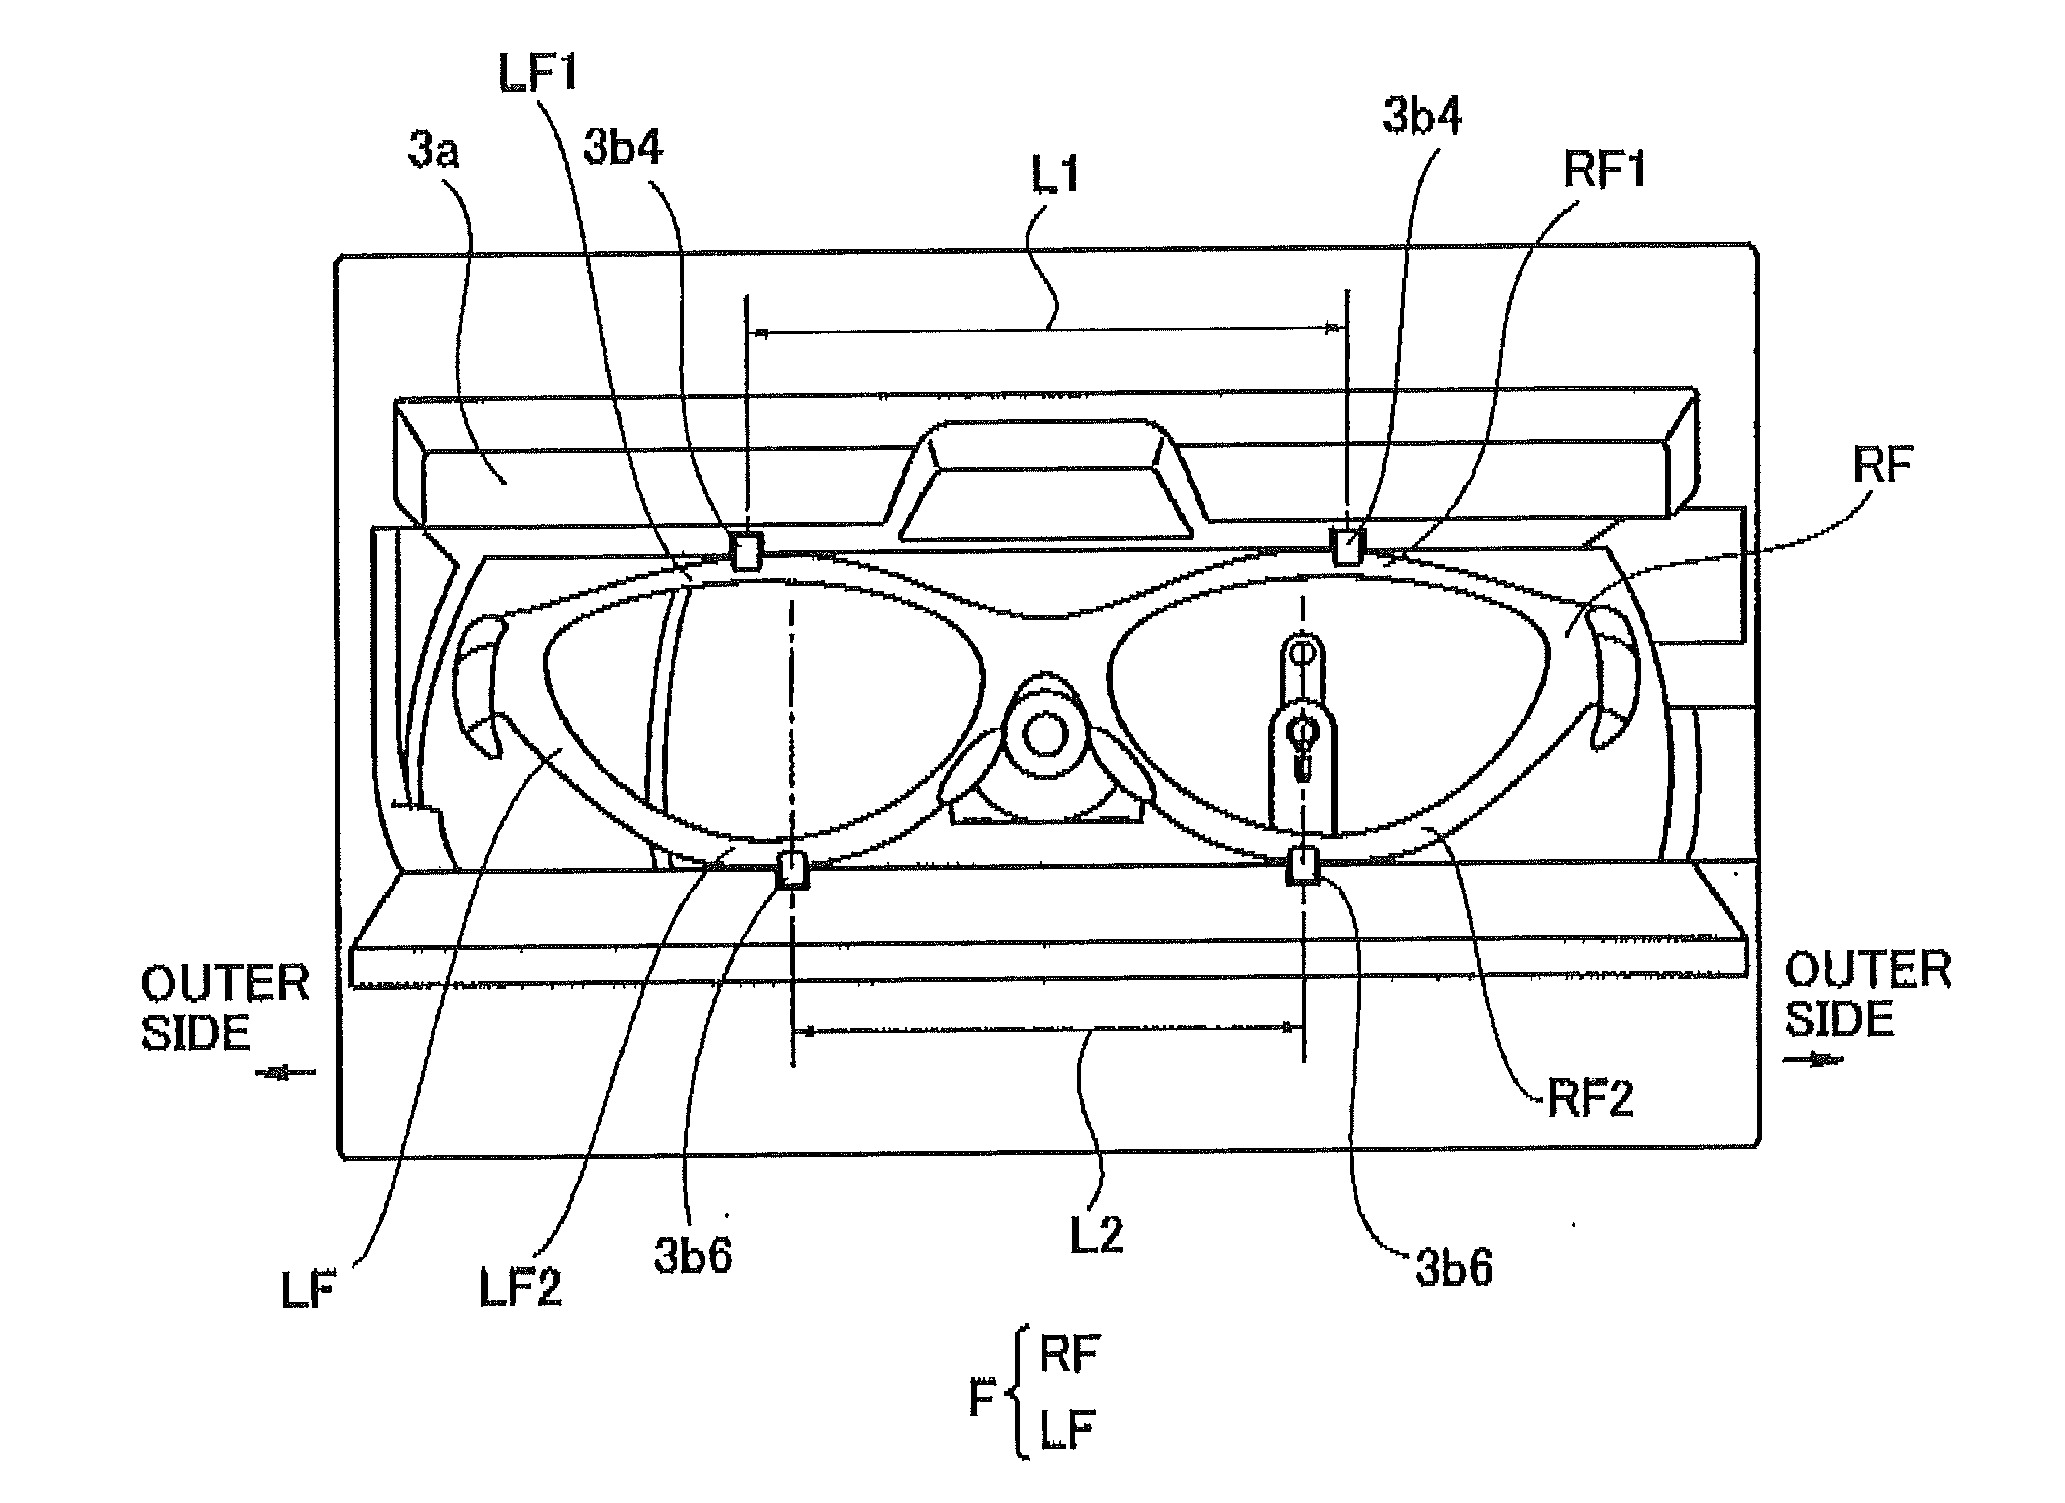 Spectacle lens frame shape measuring apparatus